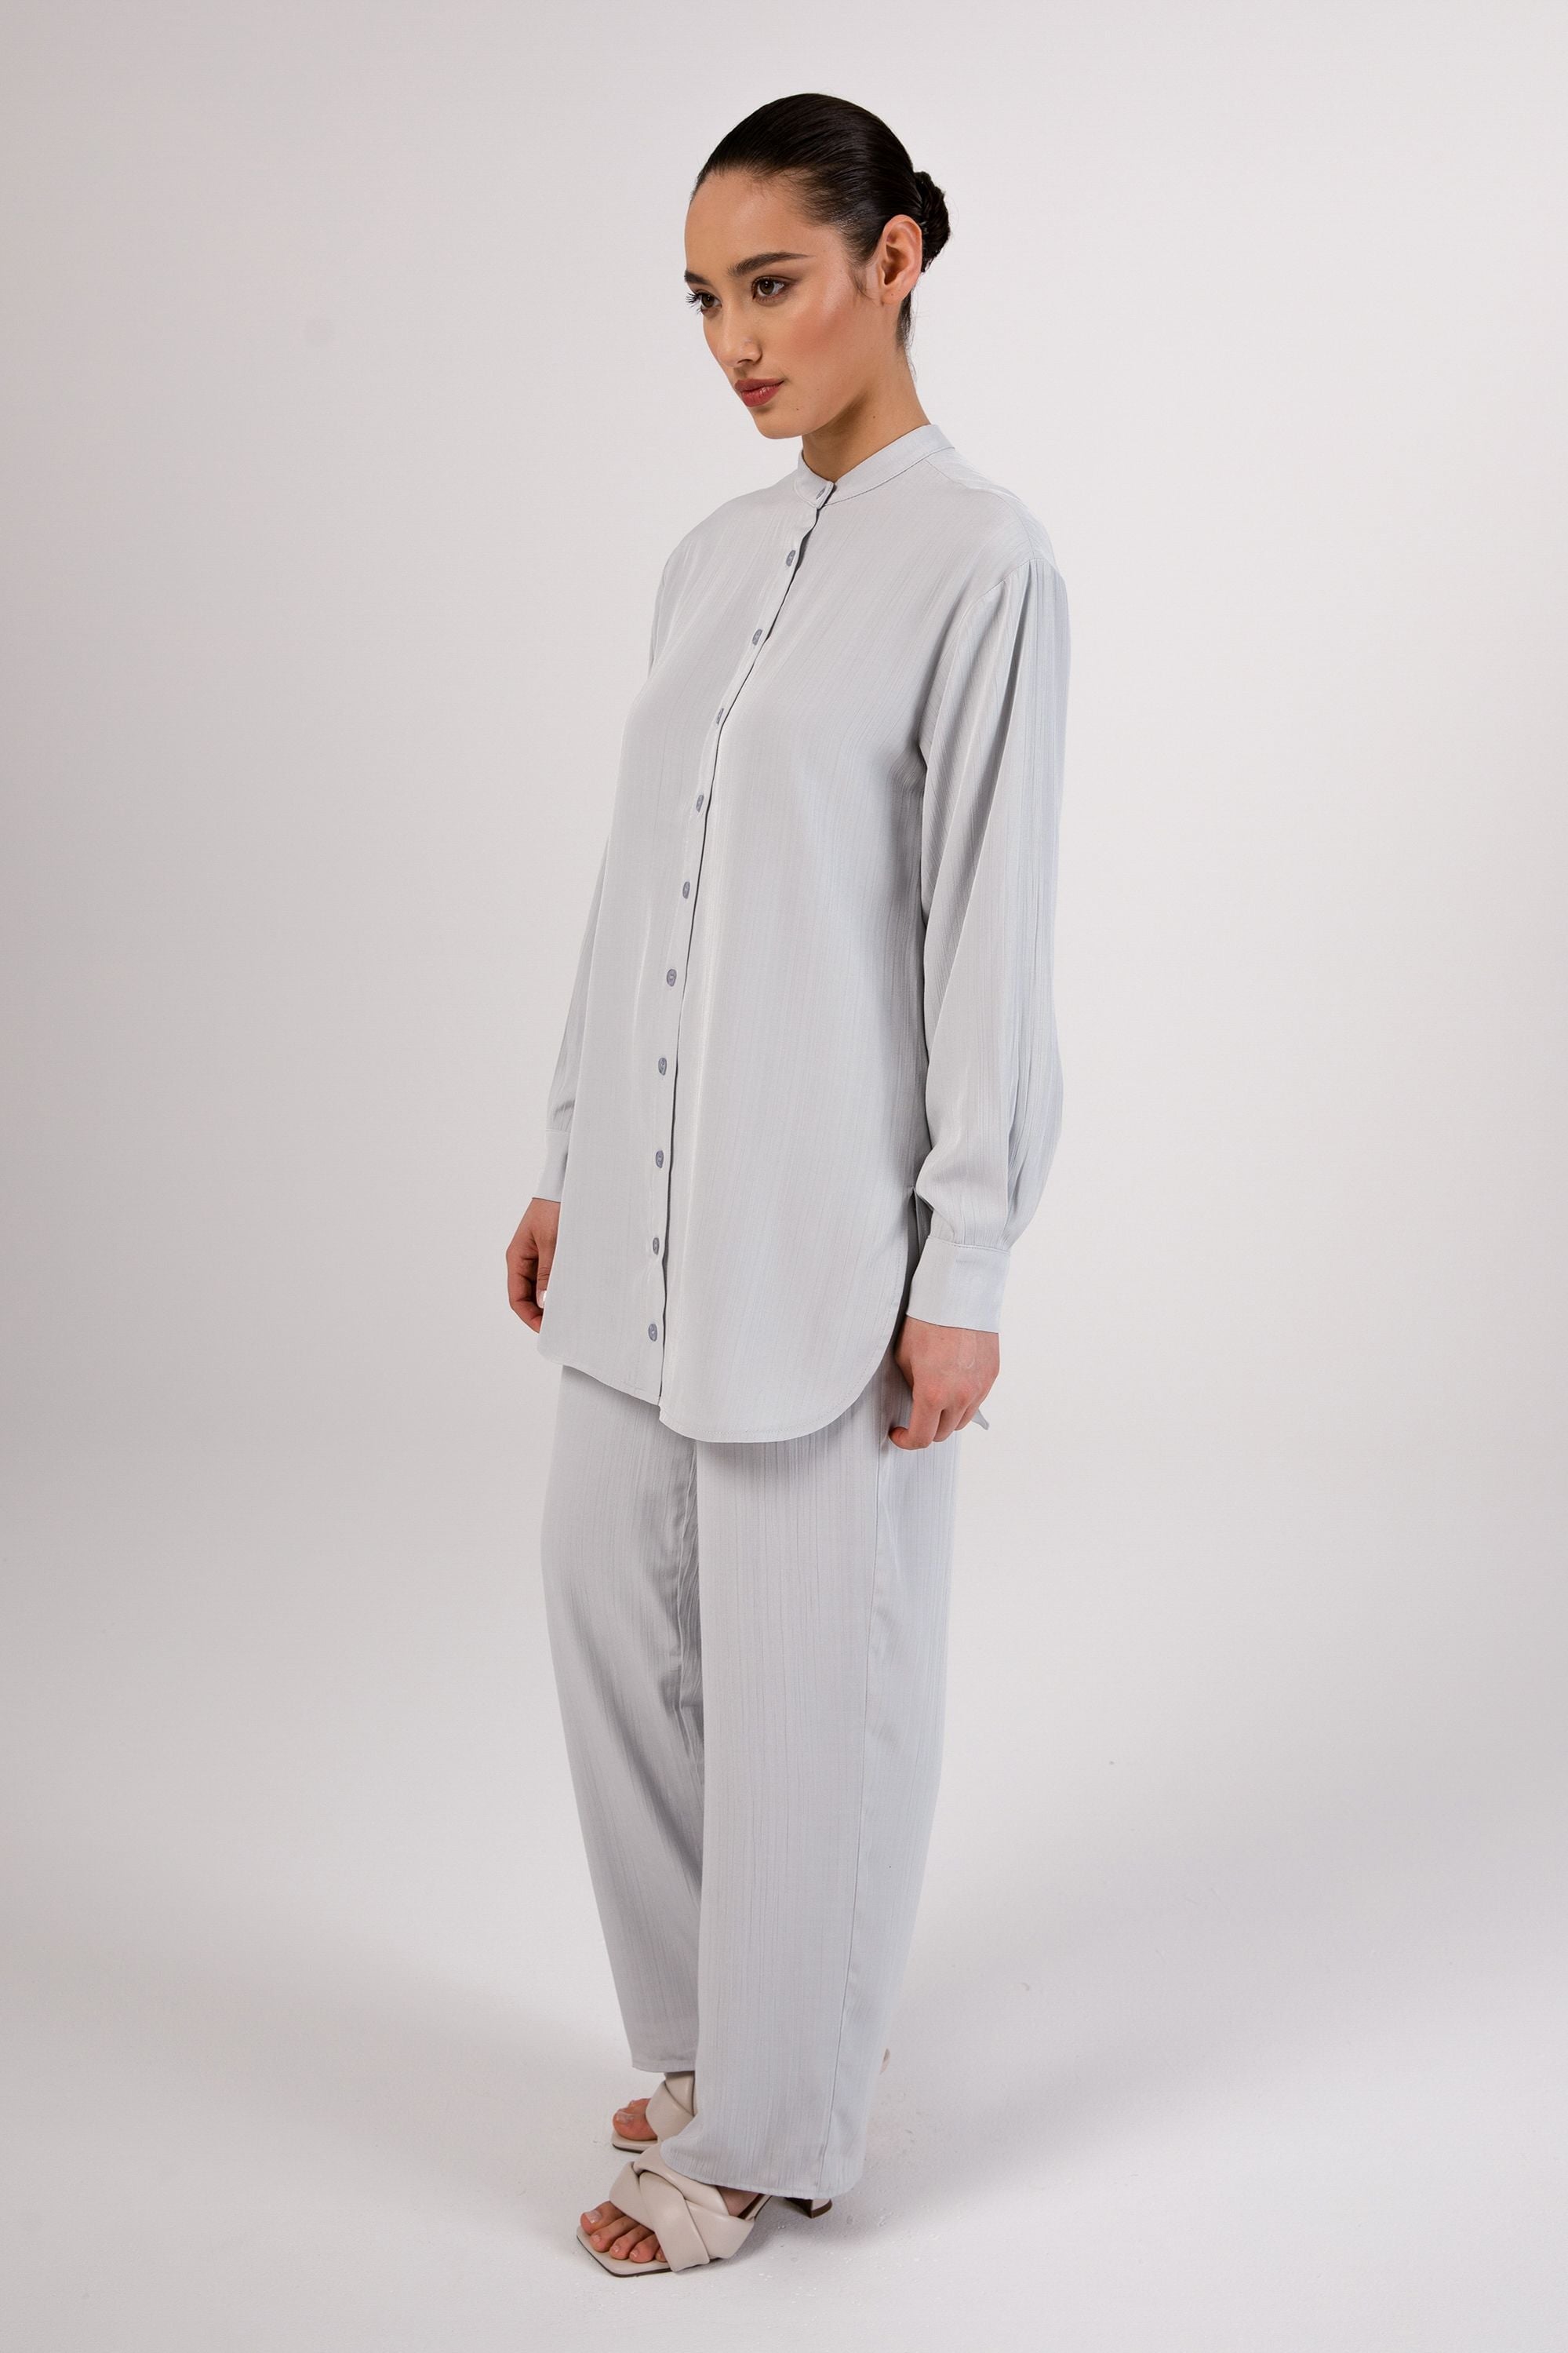 Nashwa Textured Rayon Wide Leg Pants - Soft Grey Veiled 